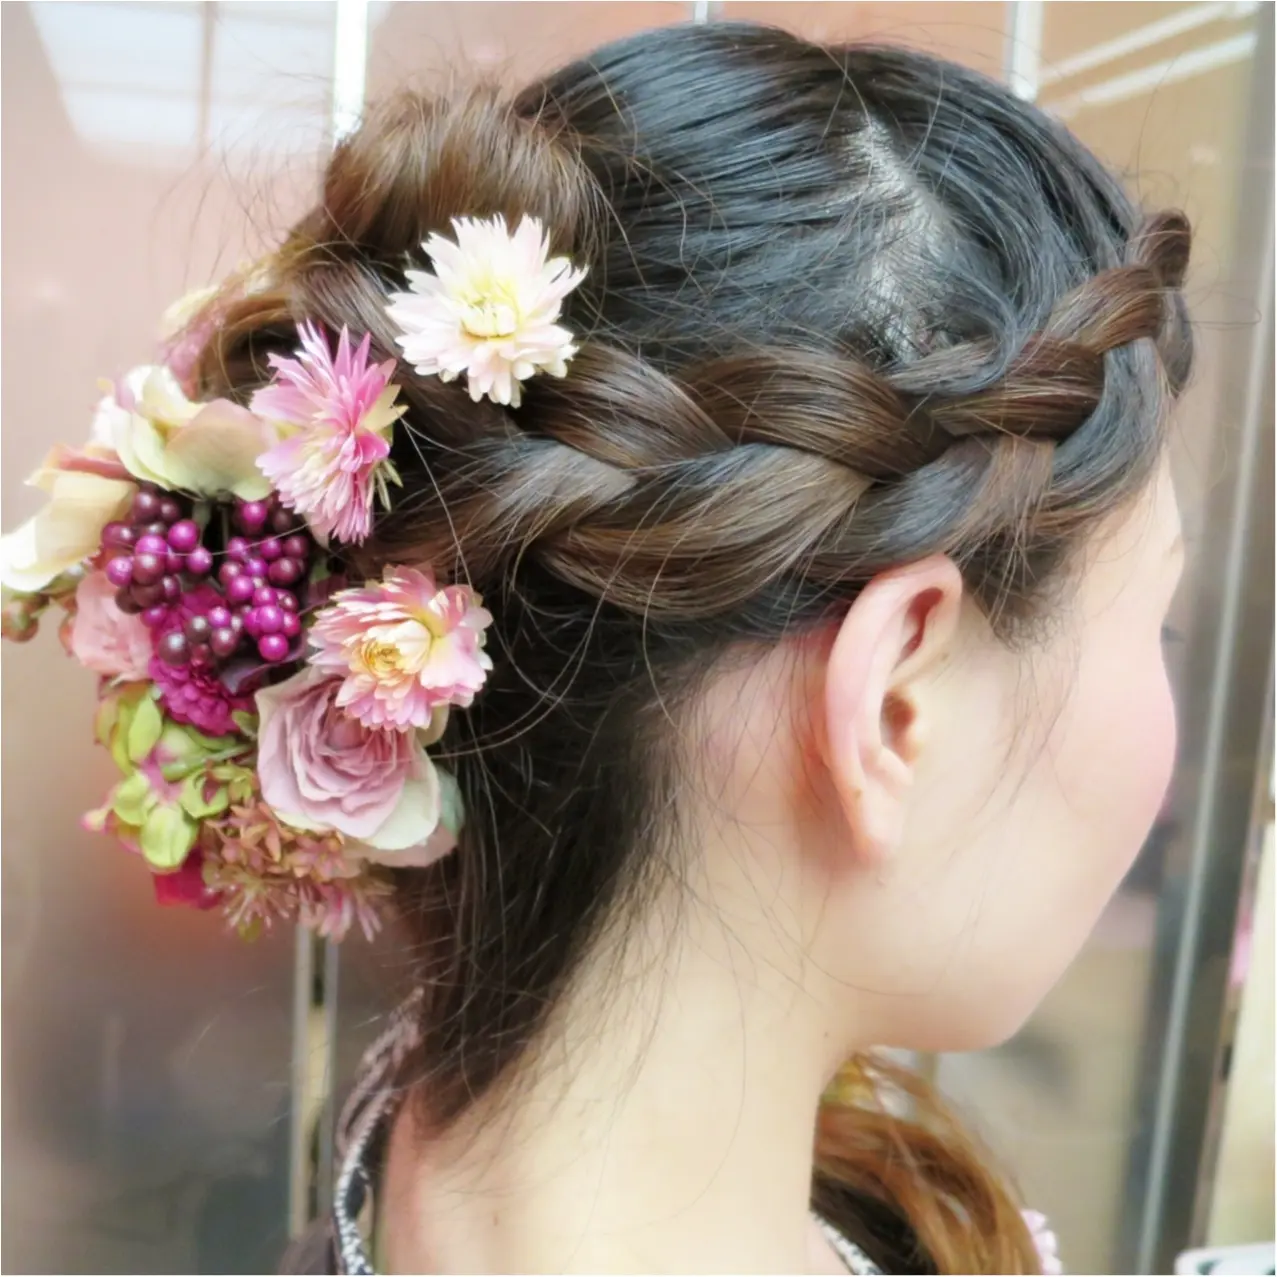 Wedding 私のヘアスタイル かわいいお花でラプンツェルみたいに